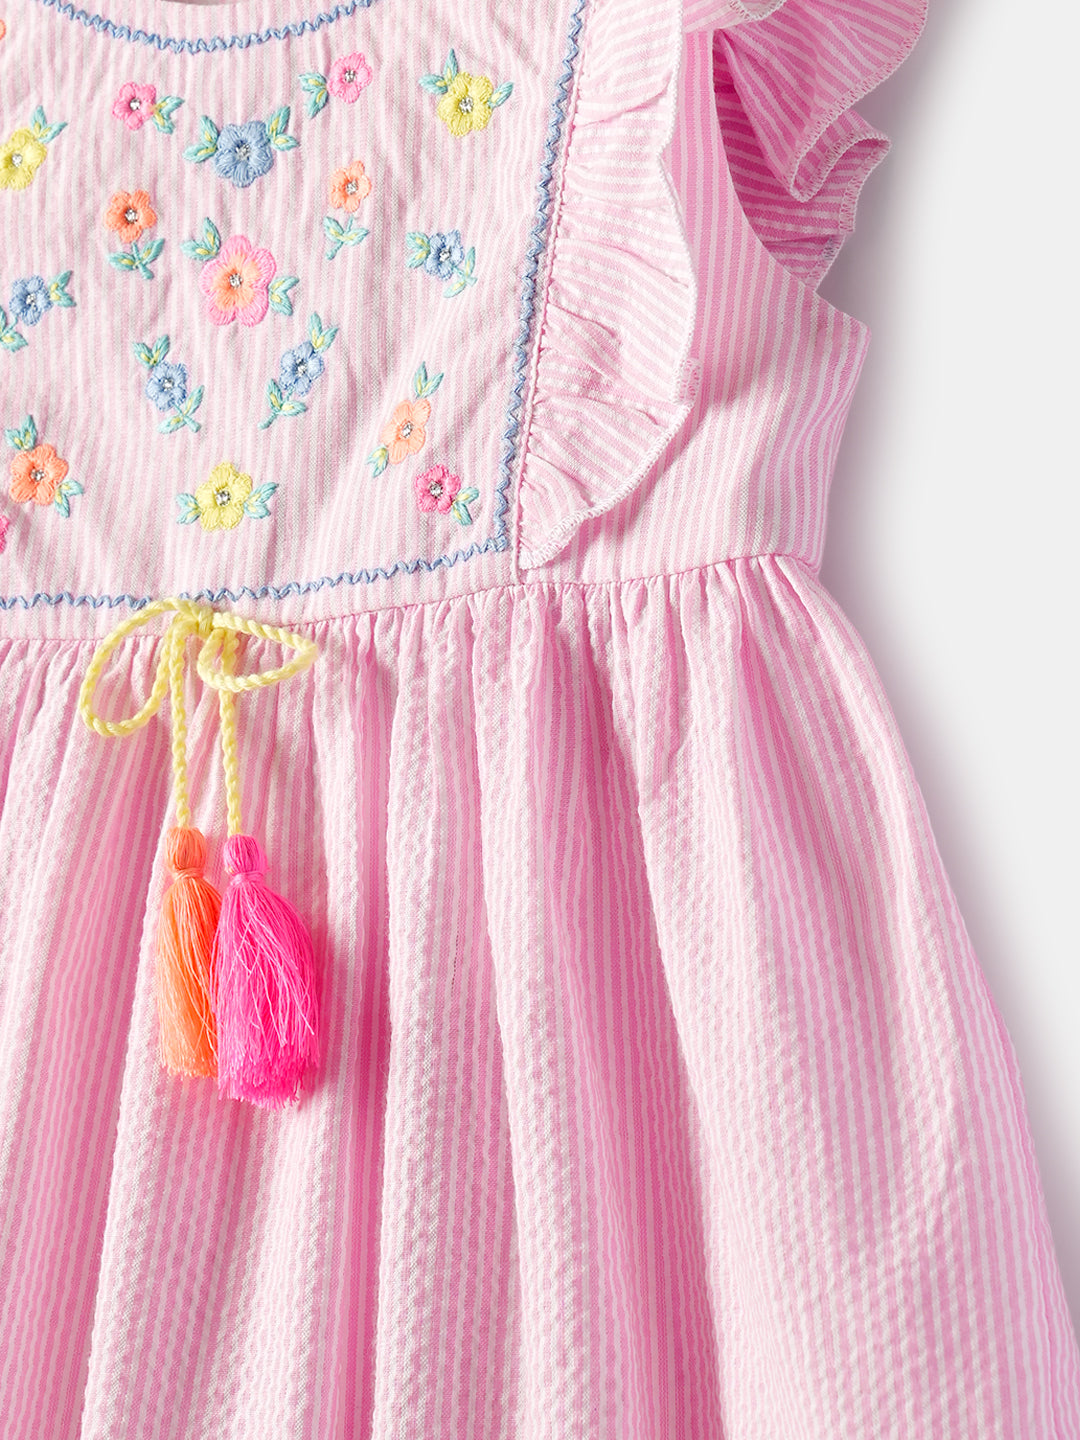 Nauti Nati Infants Embroidered Ruffled Sleeveless Cotton Fit and Flare Dress